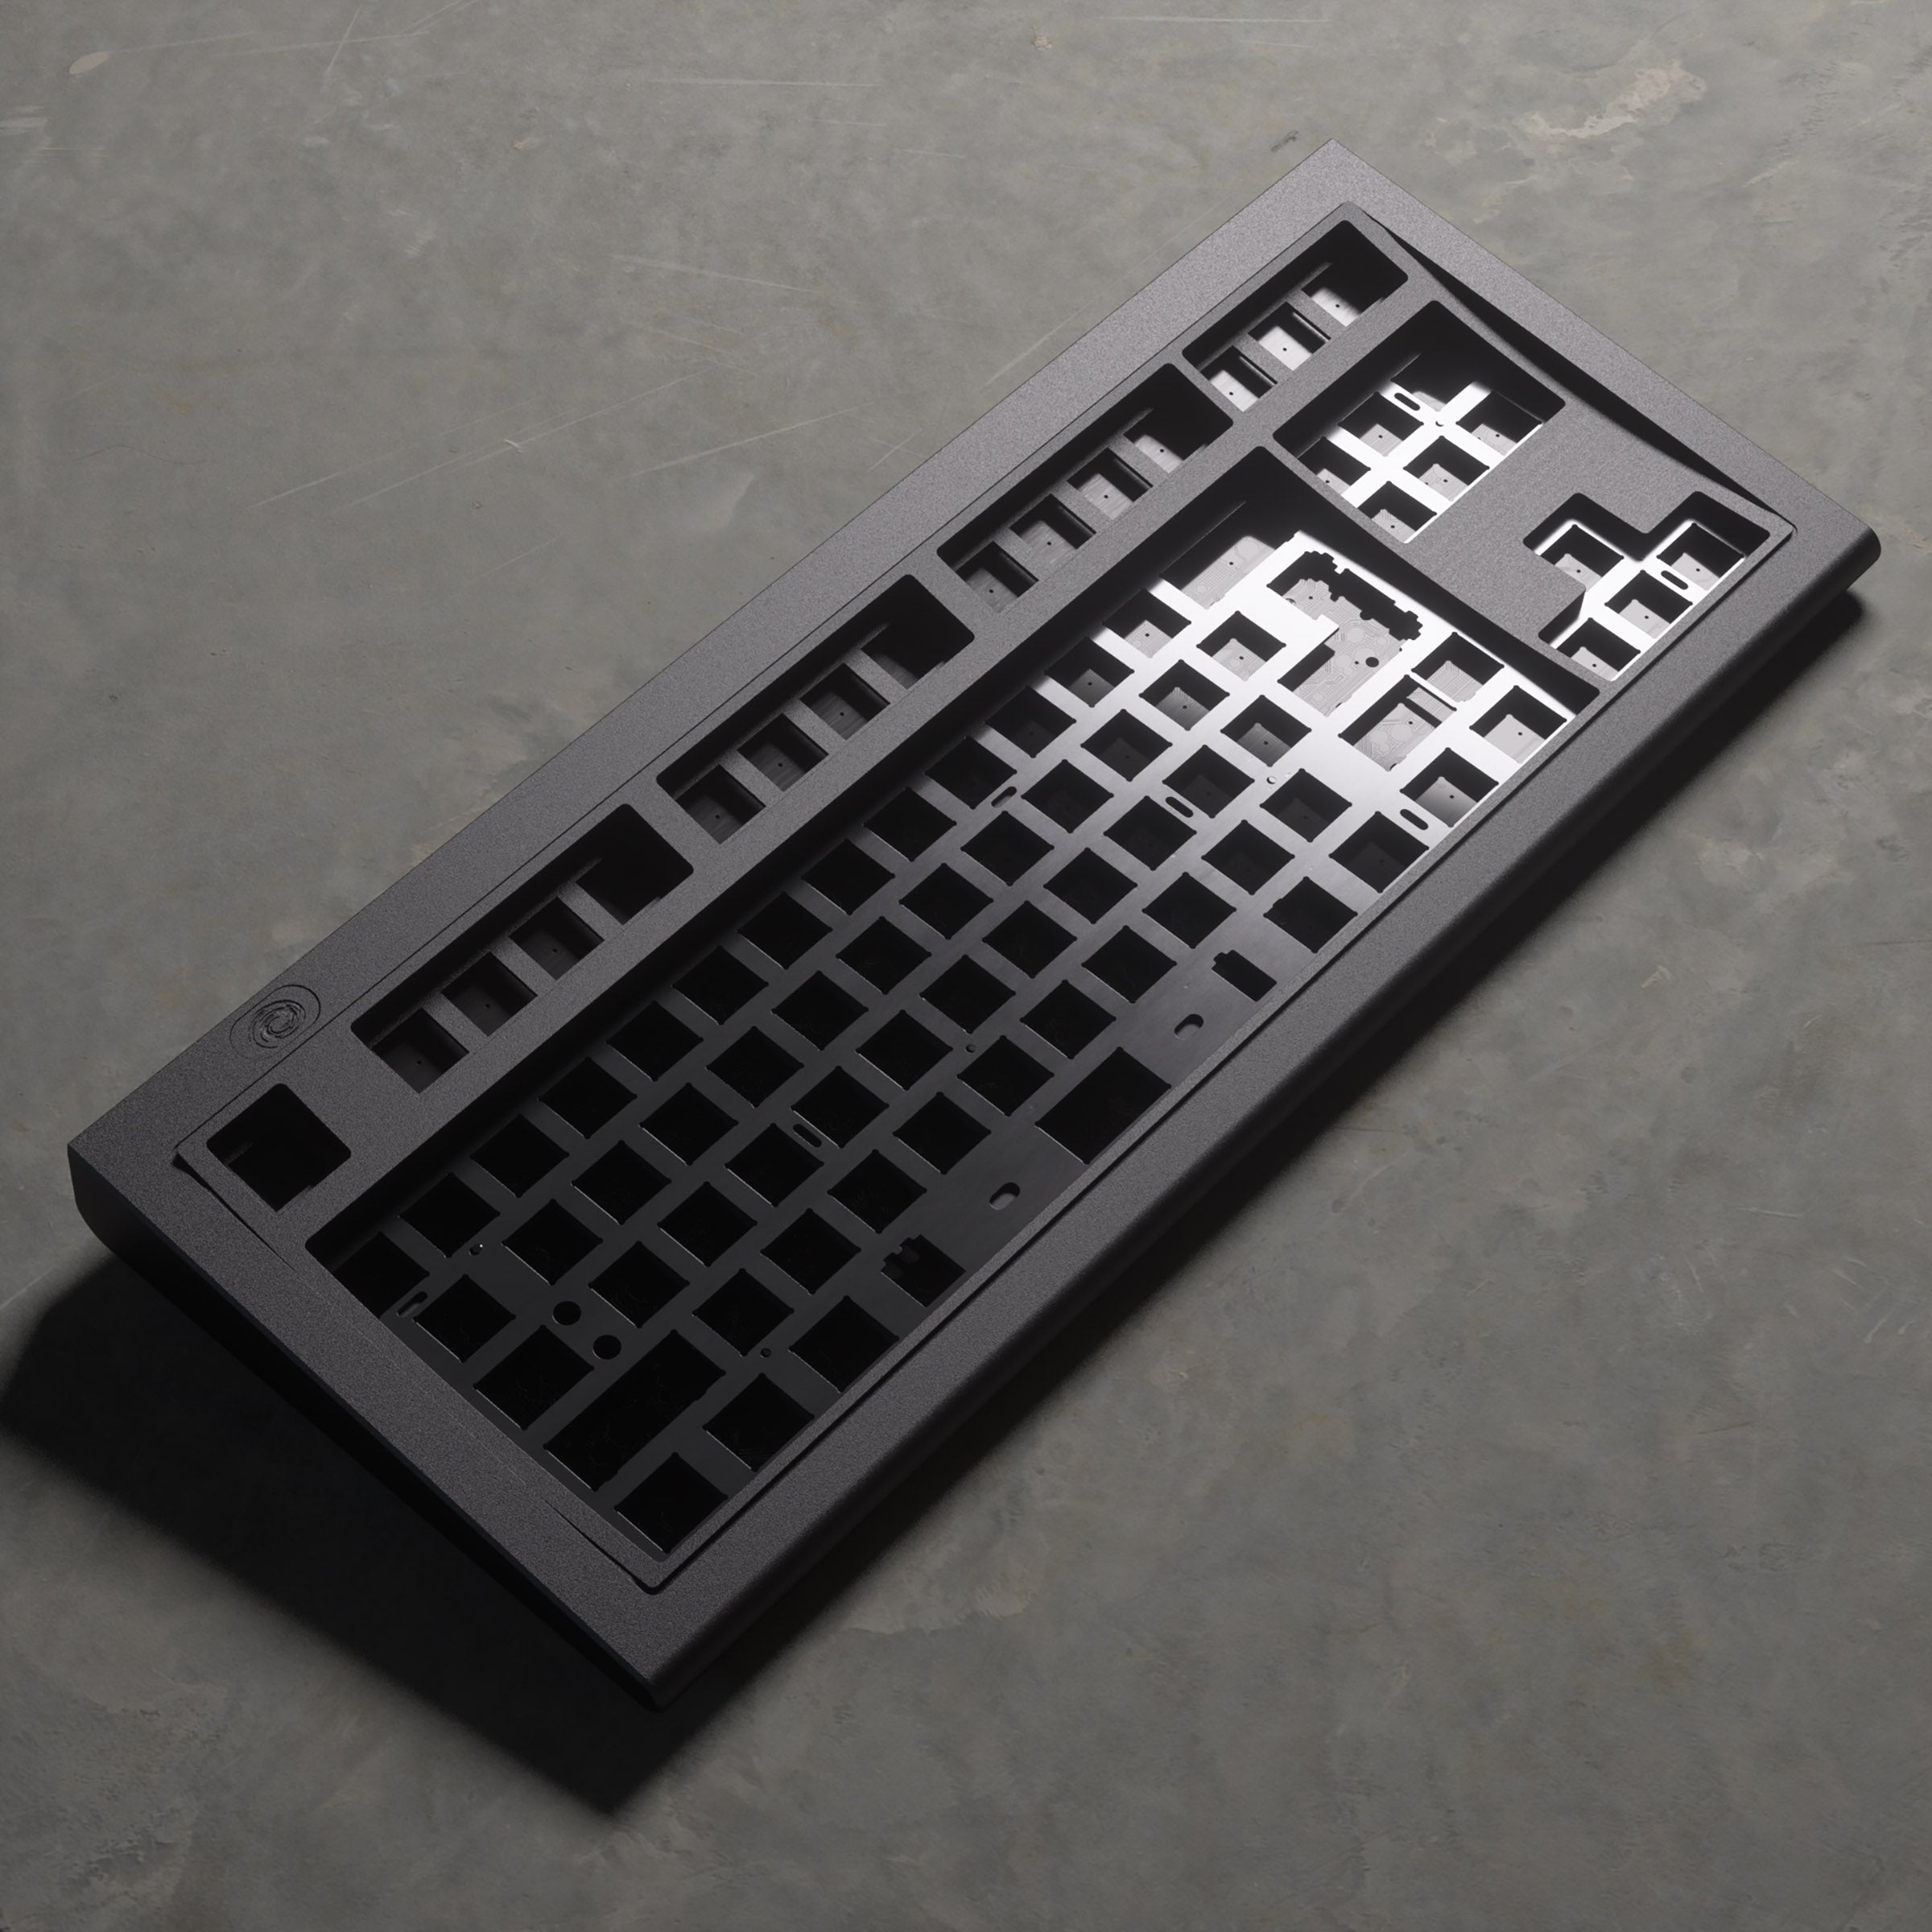 Vortex Model M SSK WK 6.25u Aluminum Barebones TKL Hotswap RGB DIY Keyboard  Kit